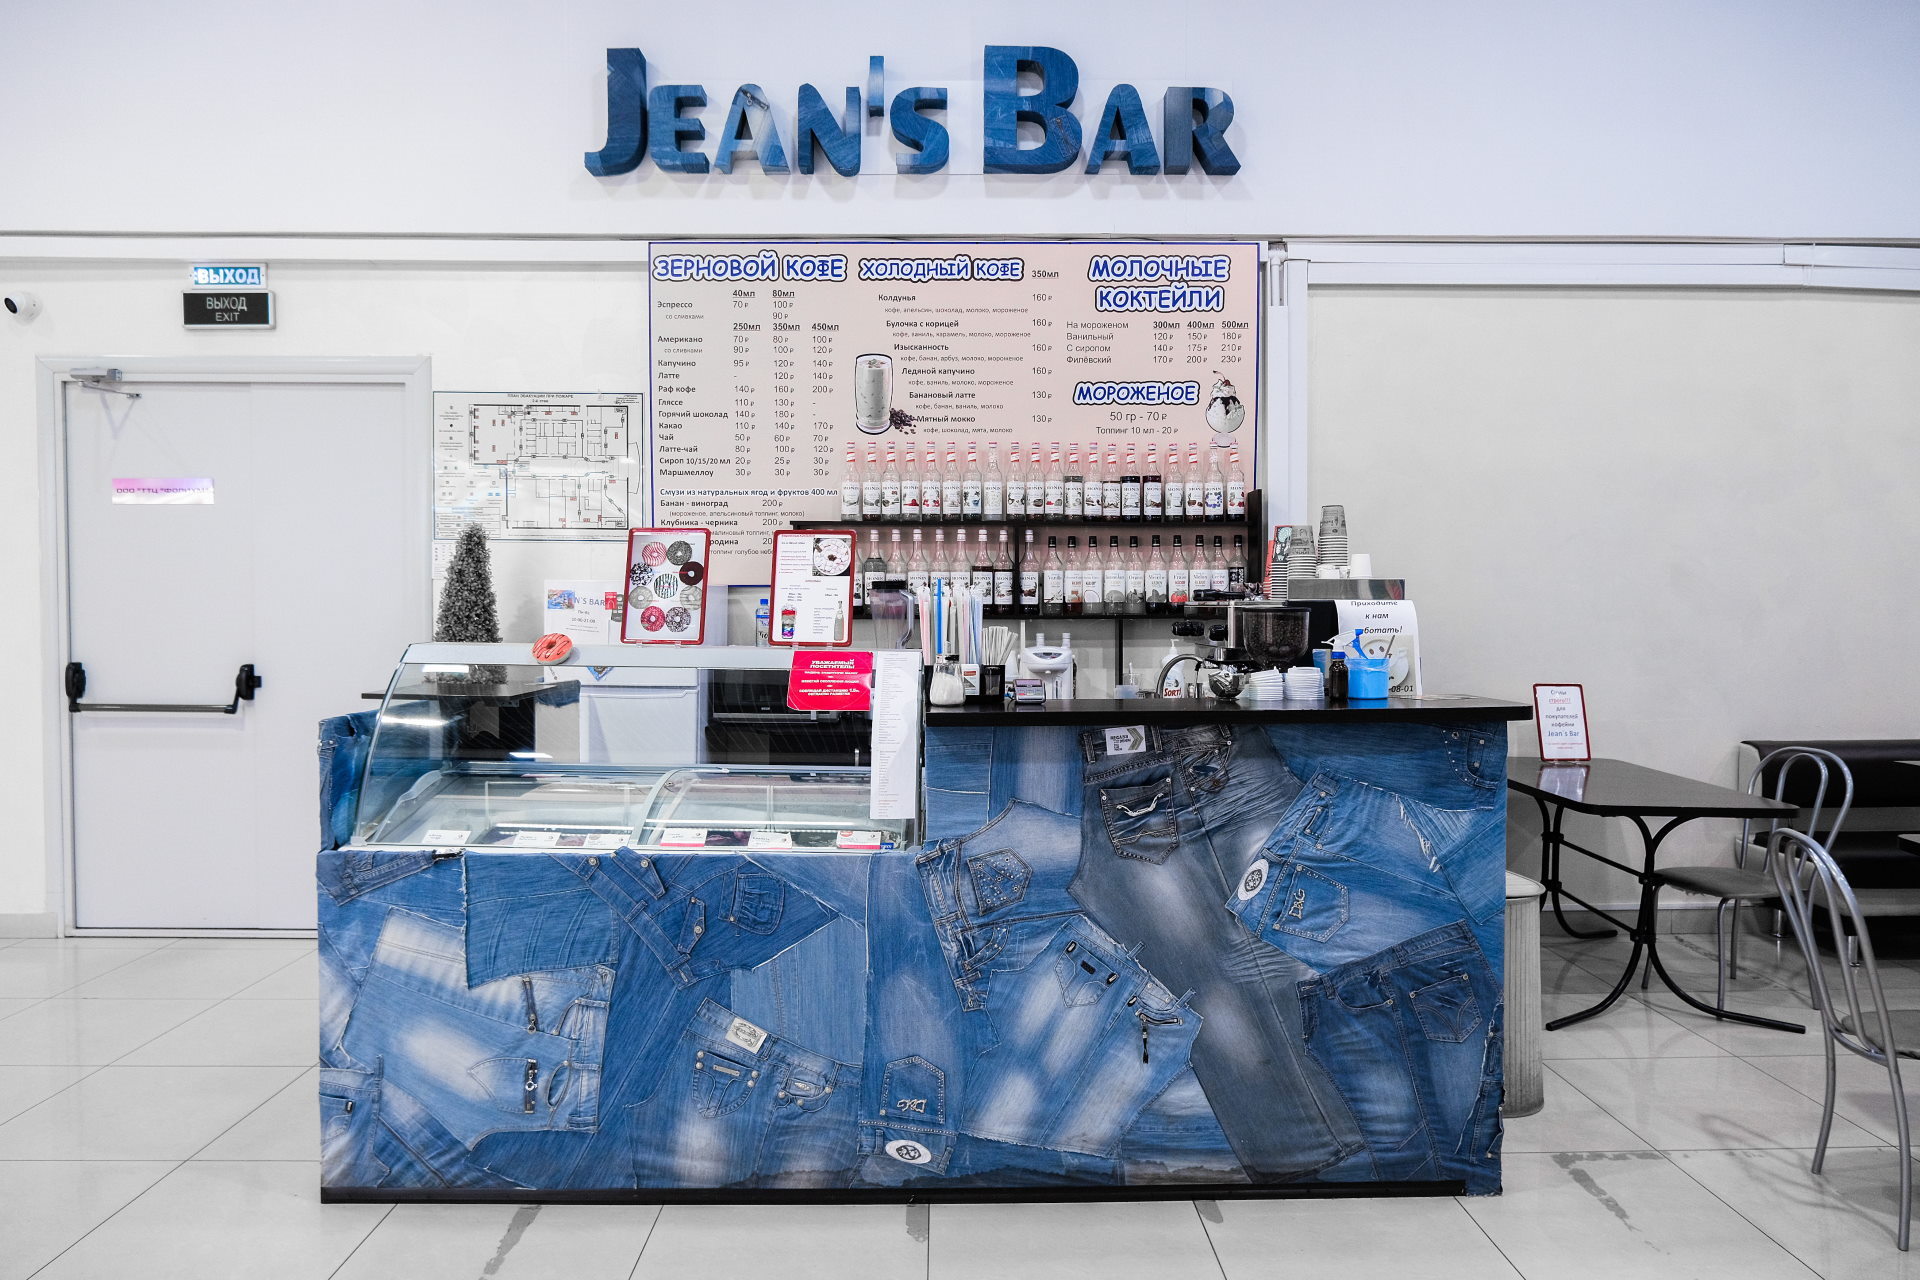 Jeans bar